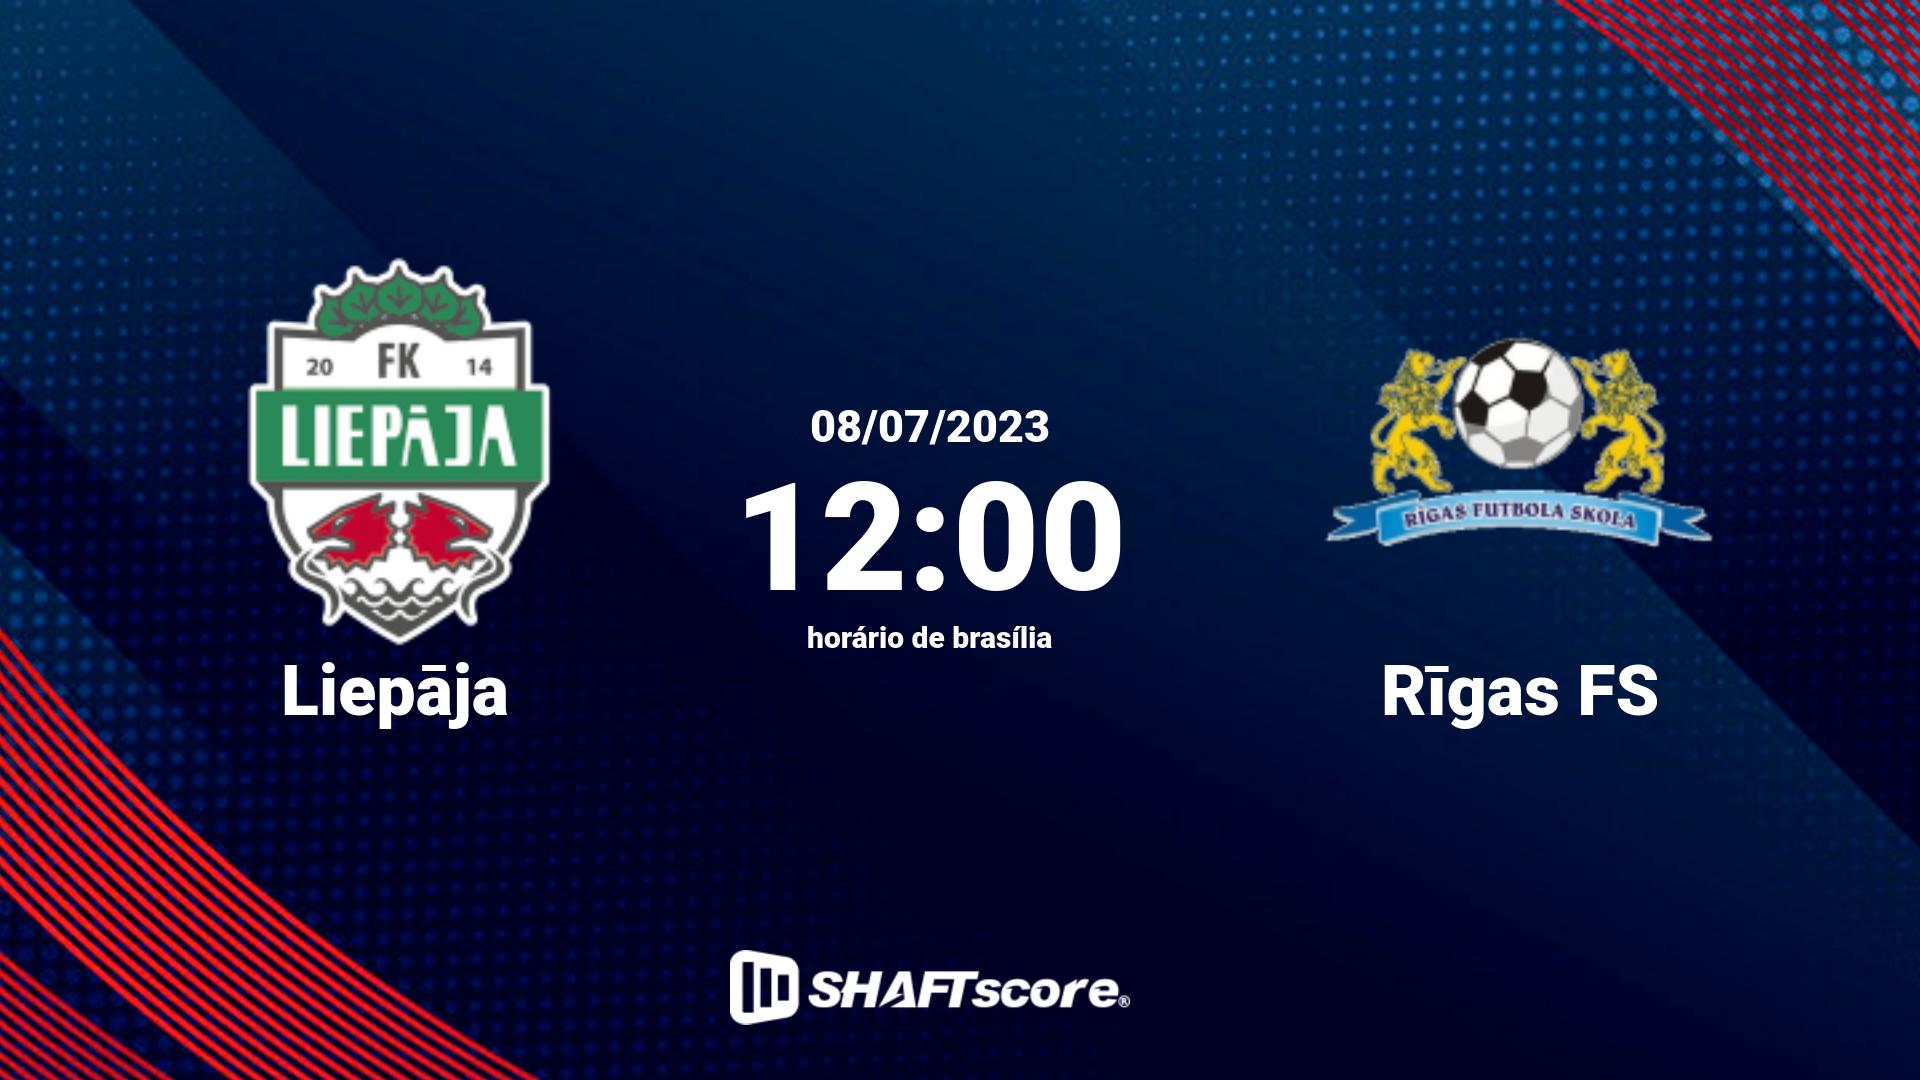 Estatísticas do jogo Liepāja vs Rīgas FS 08.07 12:00